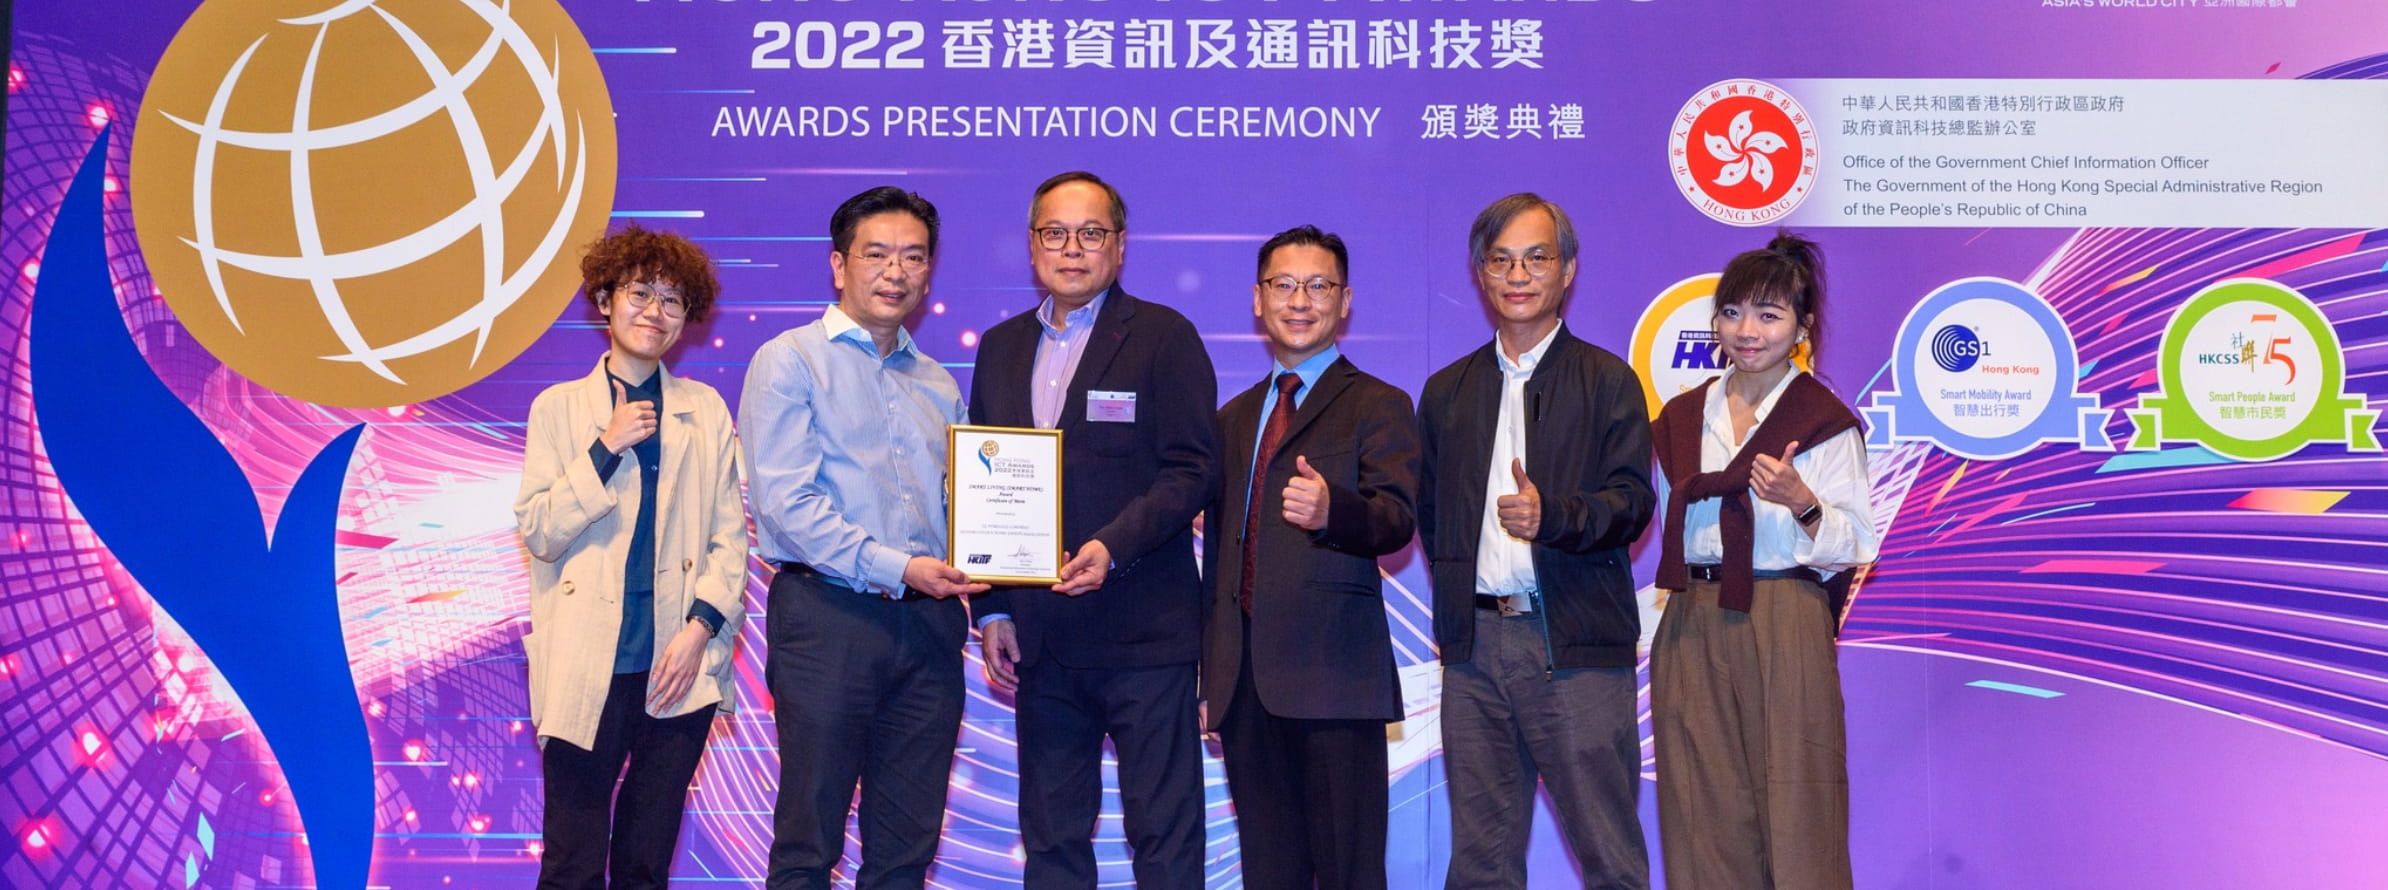 SG Wireless team posing with awards at award presentation ceremony